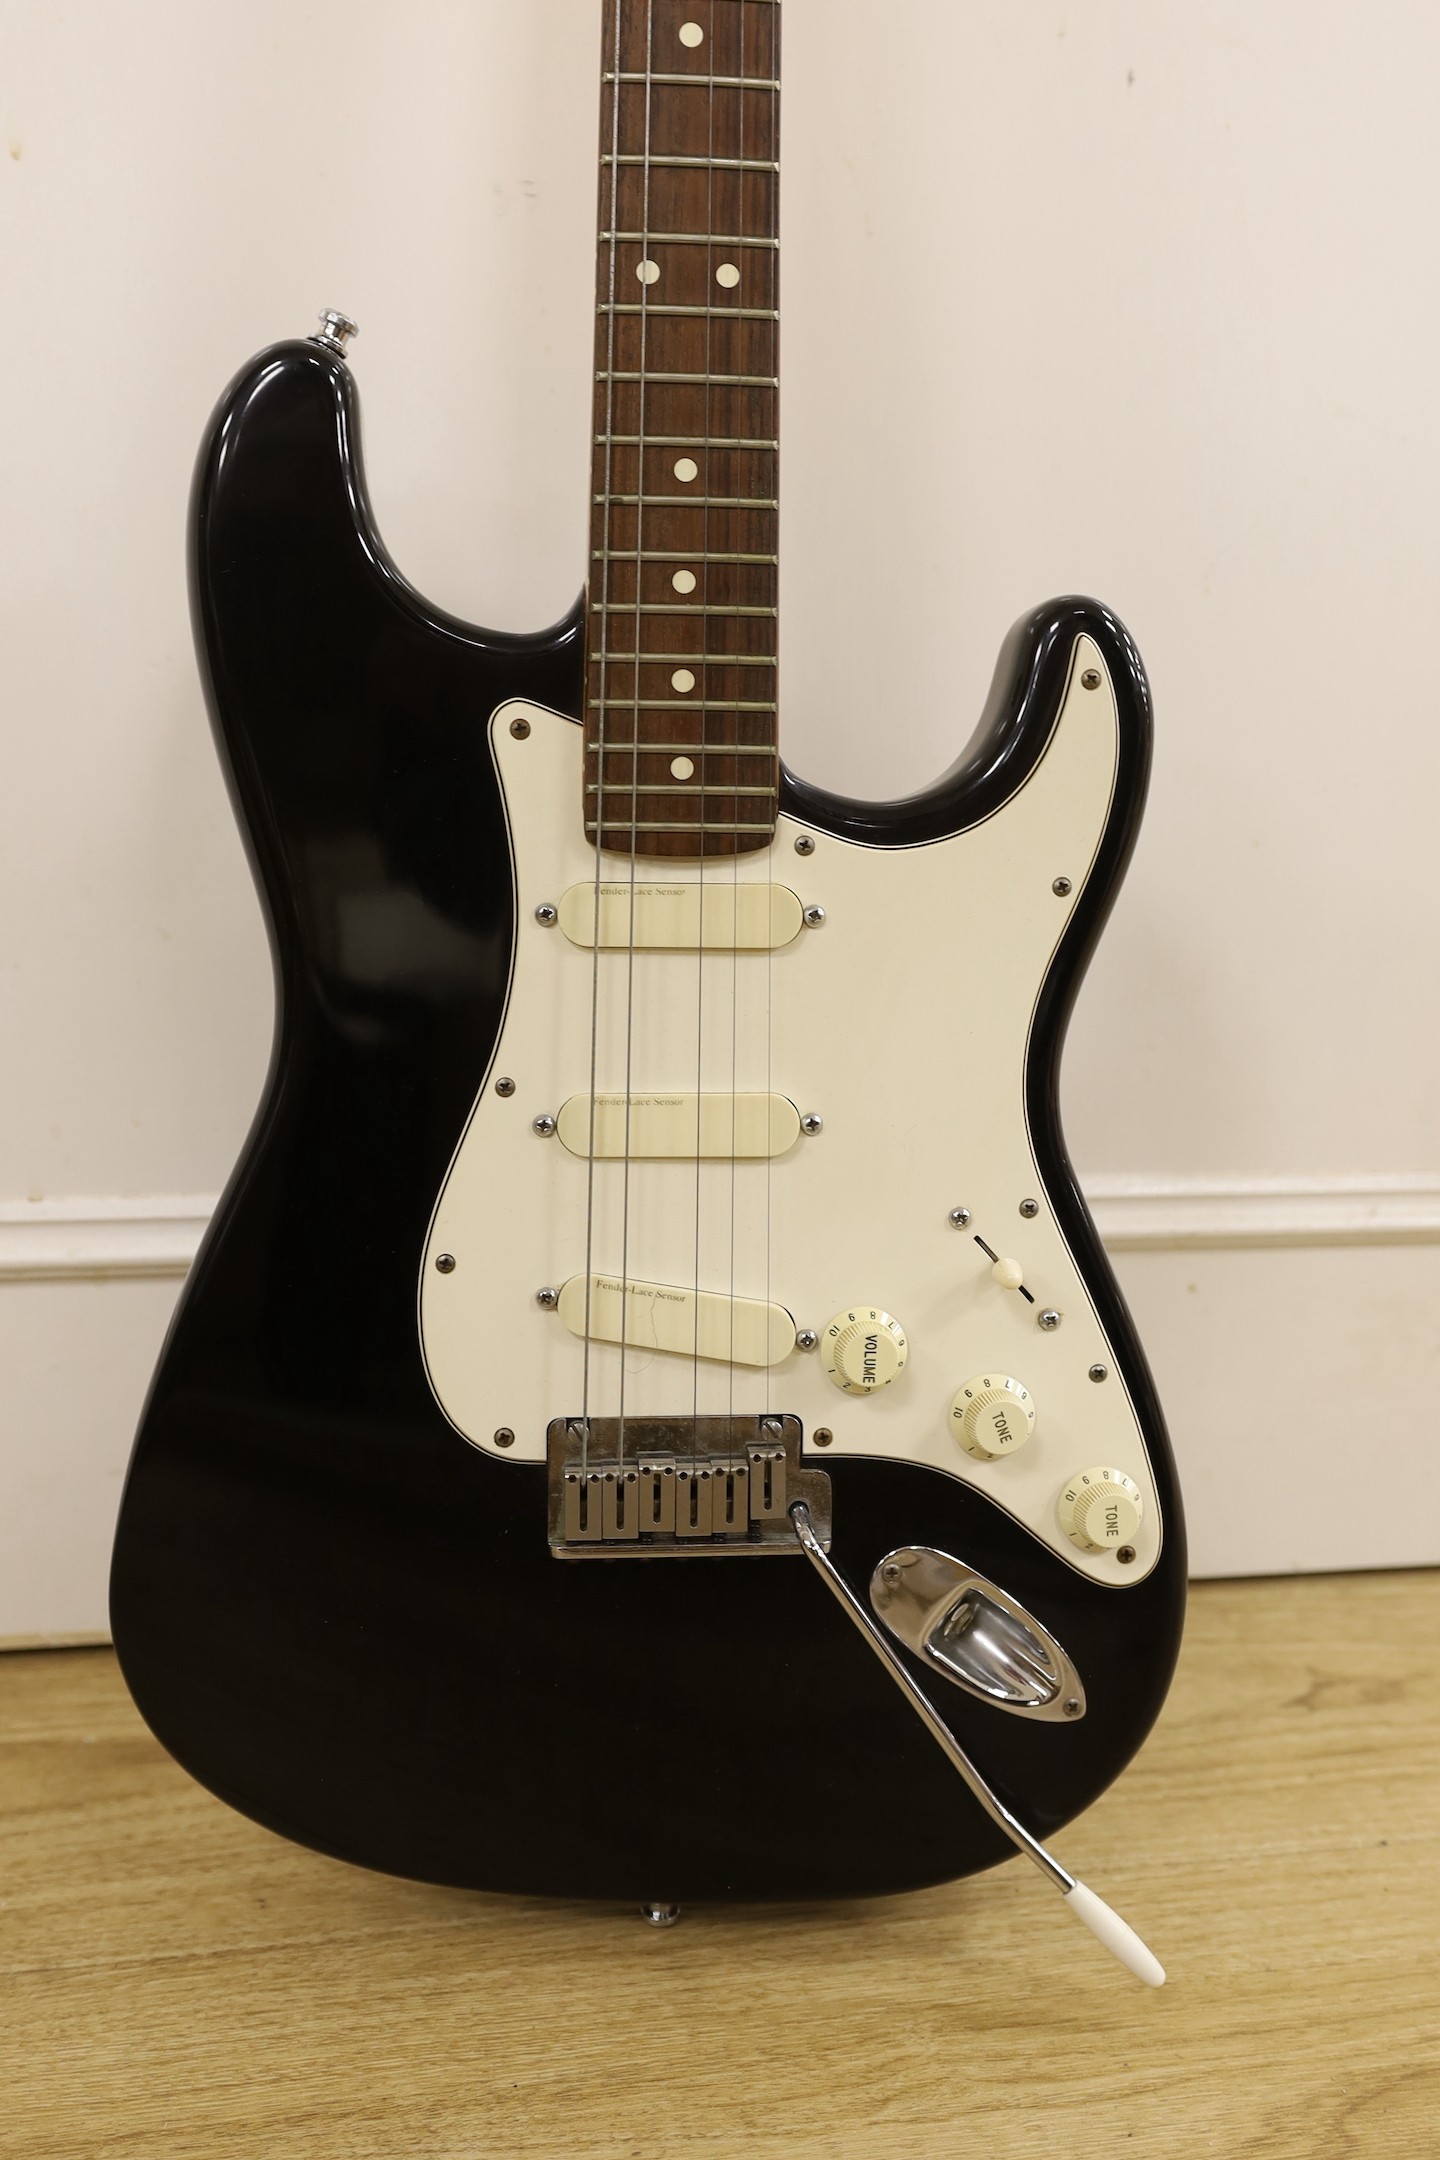 A 1980’s Fender Stratocaster, U.S.A. Serial No. E451951, lace sensor pickups with hard flight case, 98cms high.